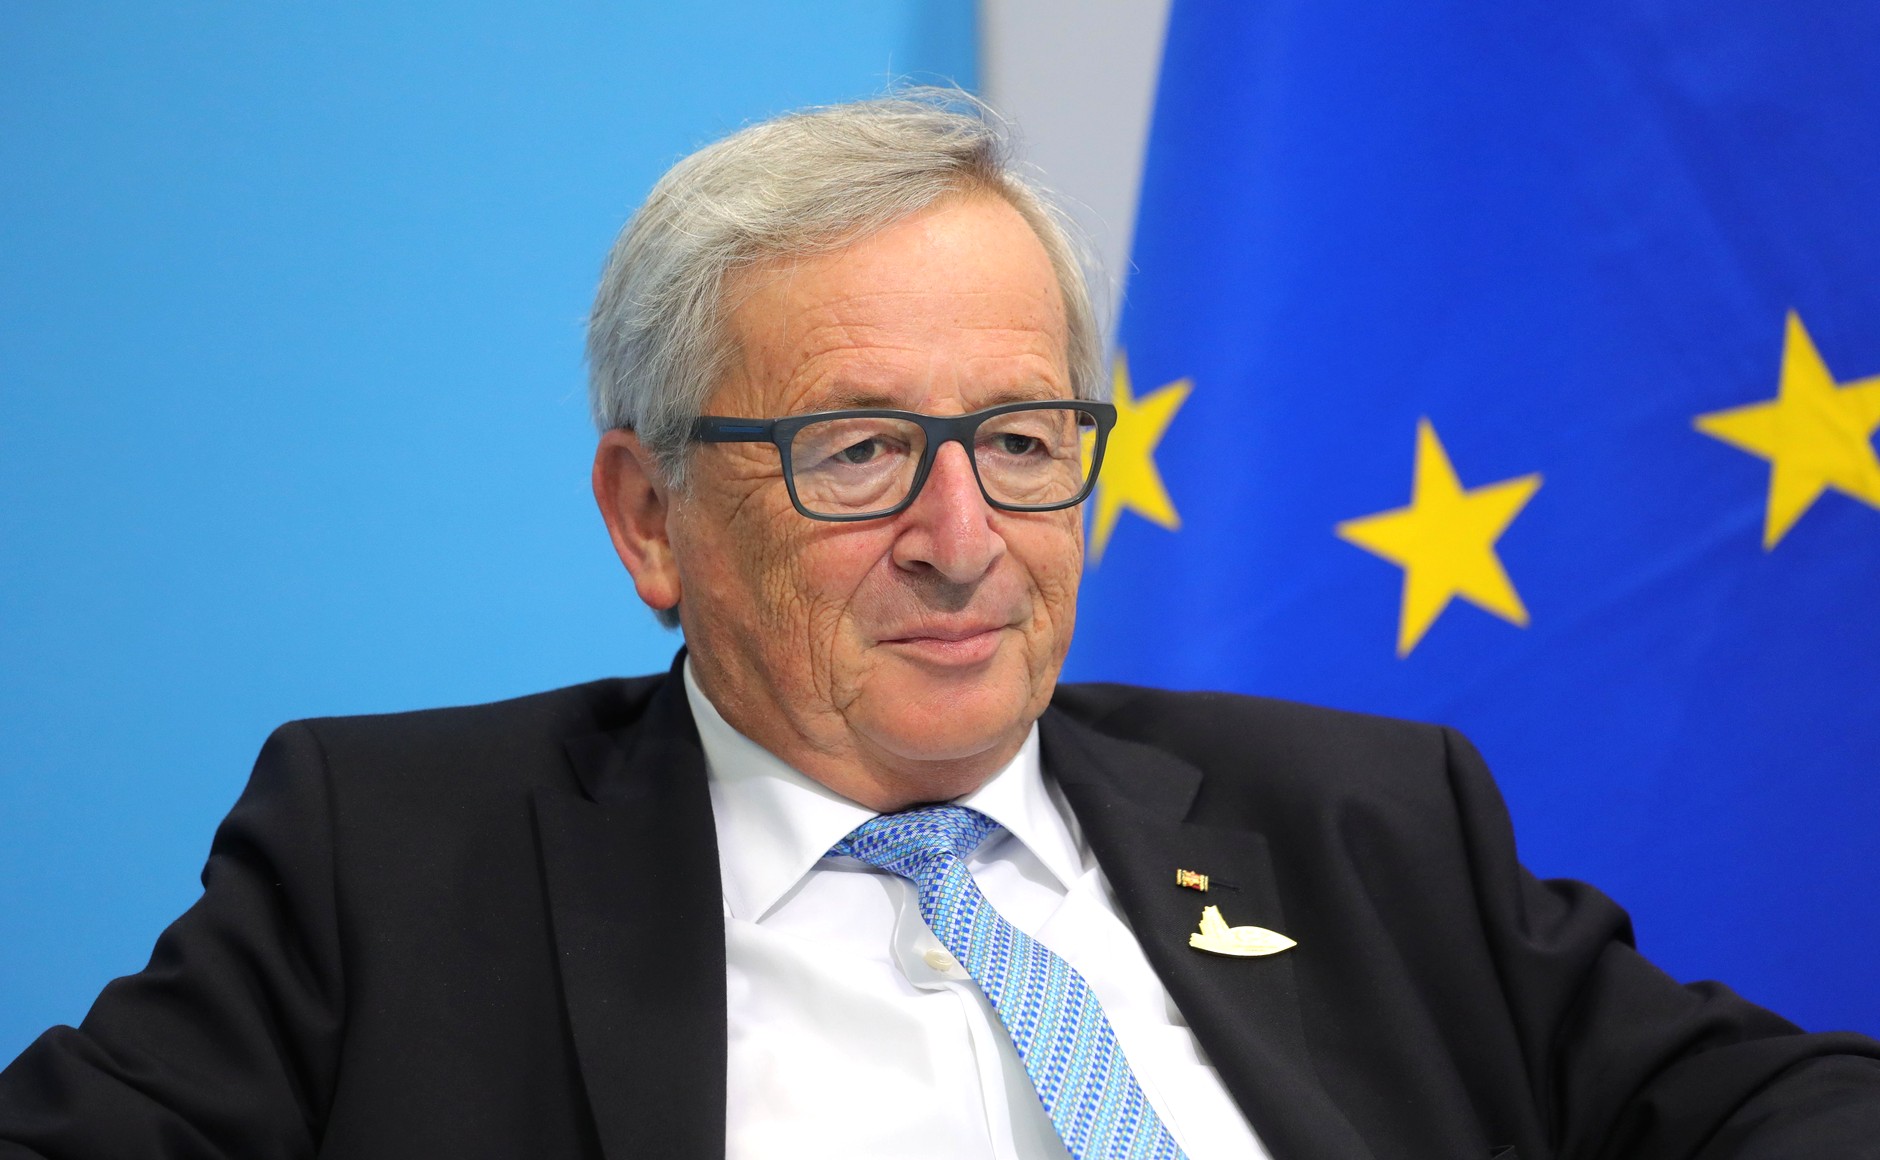 Naming of von der Leyen as EU executive chief not transparent -Juncker